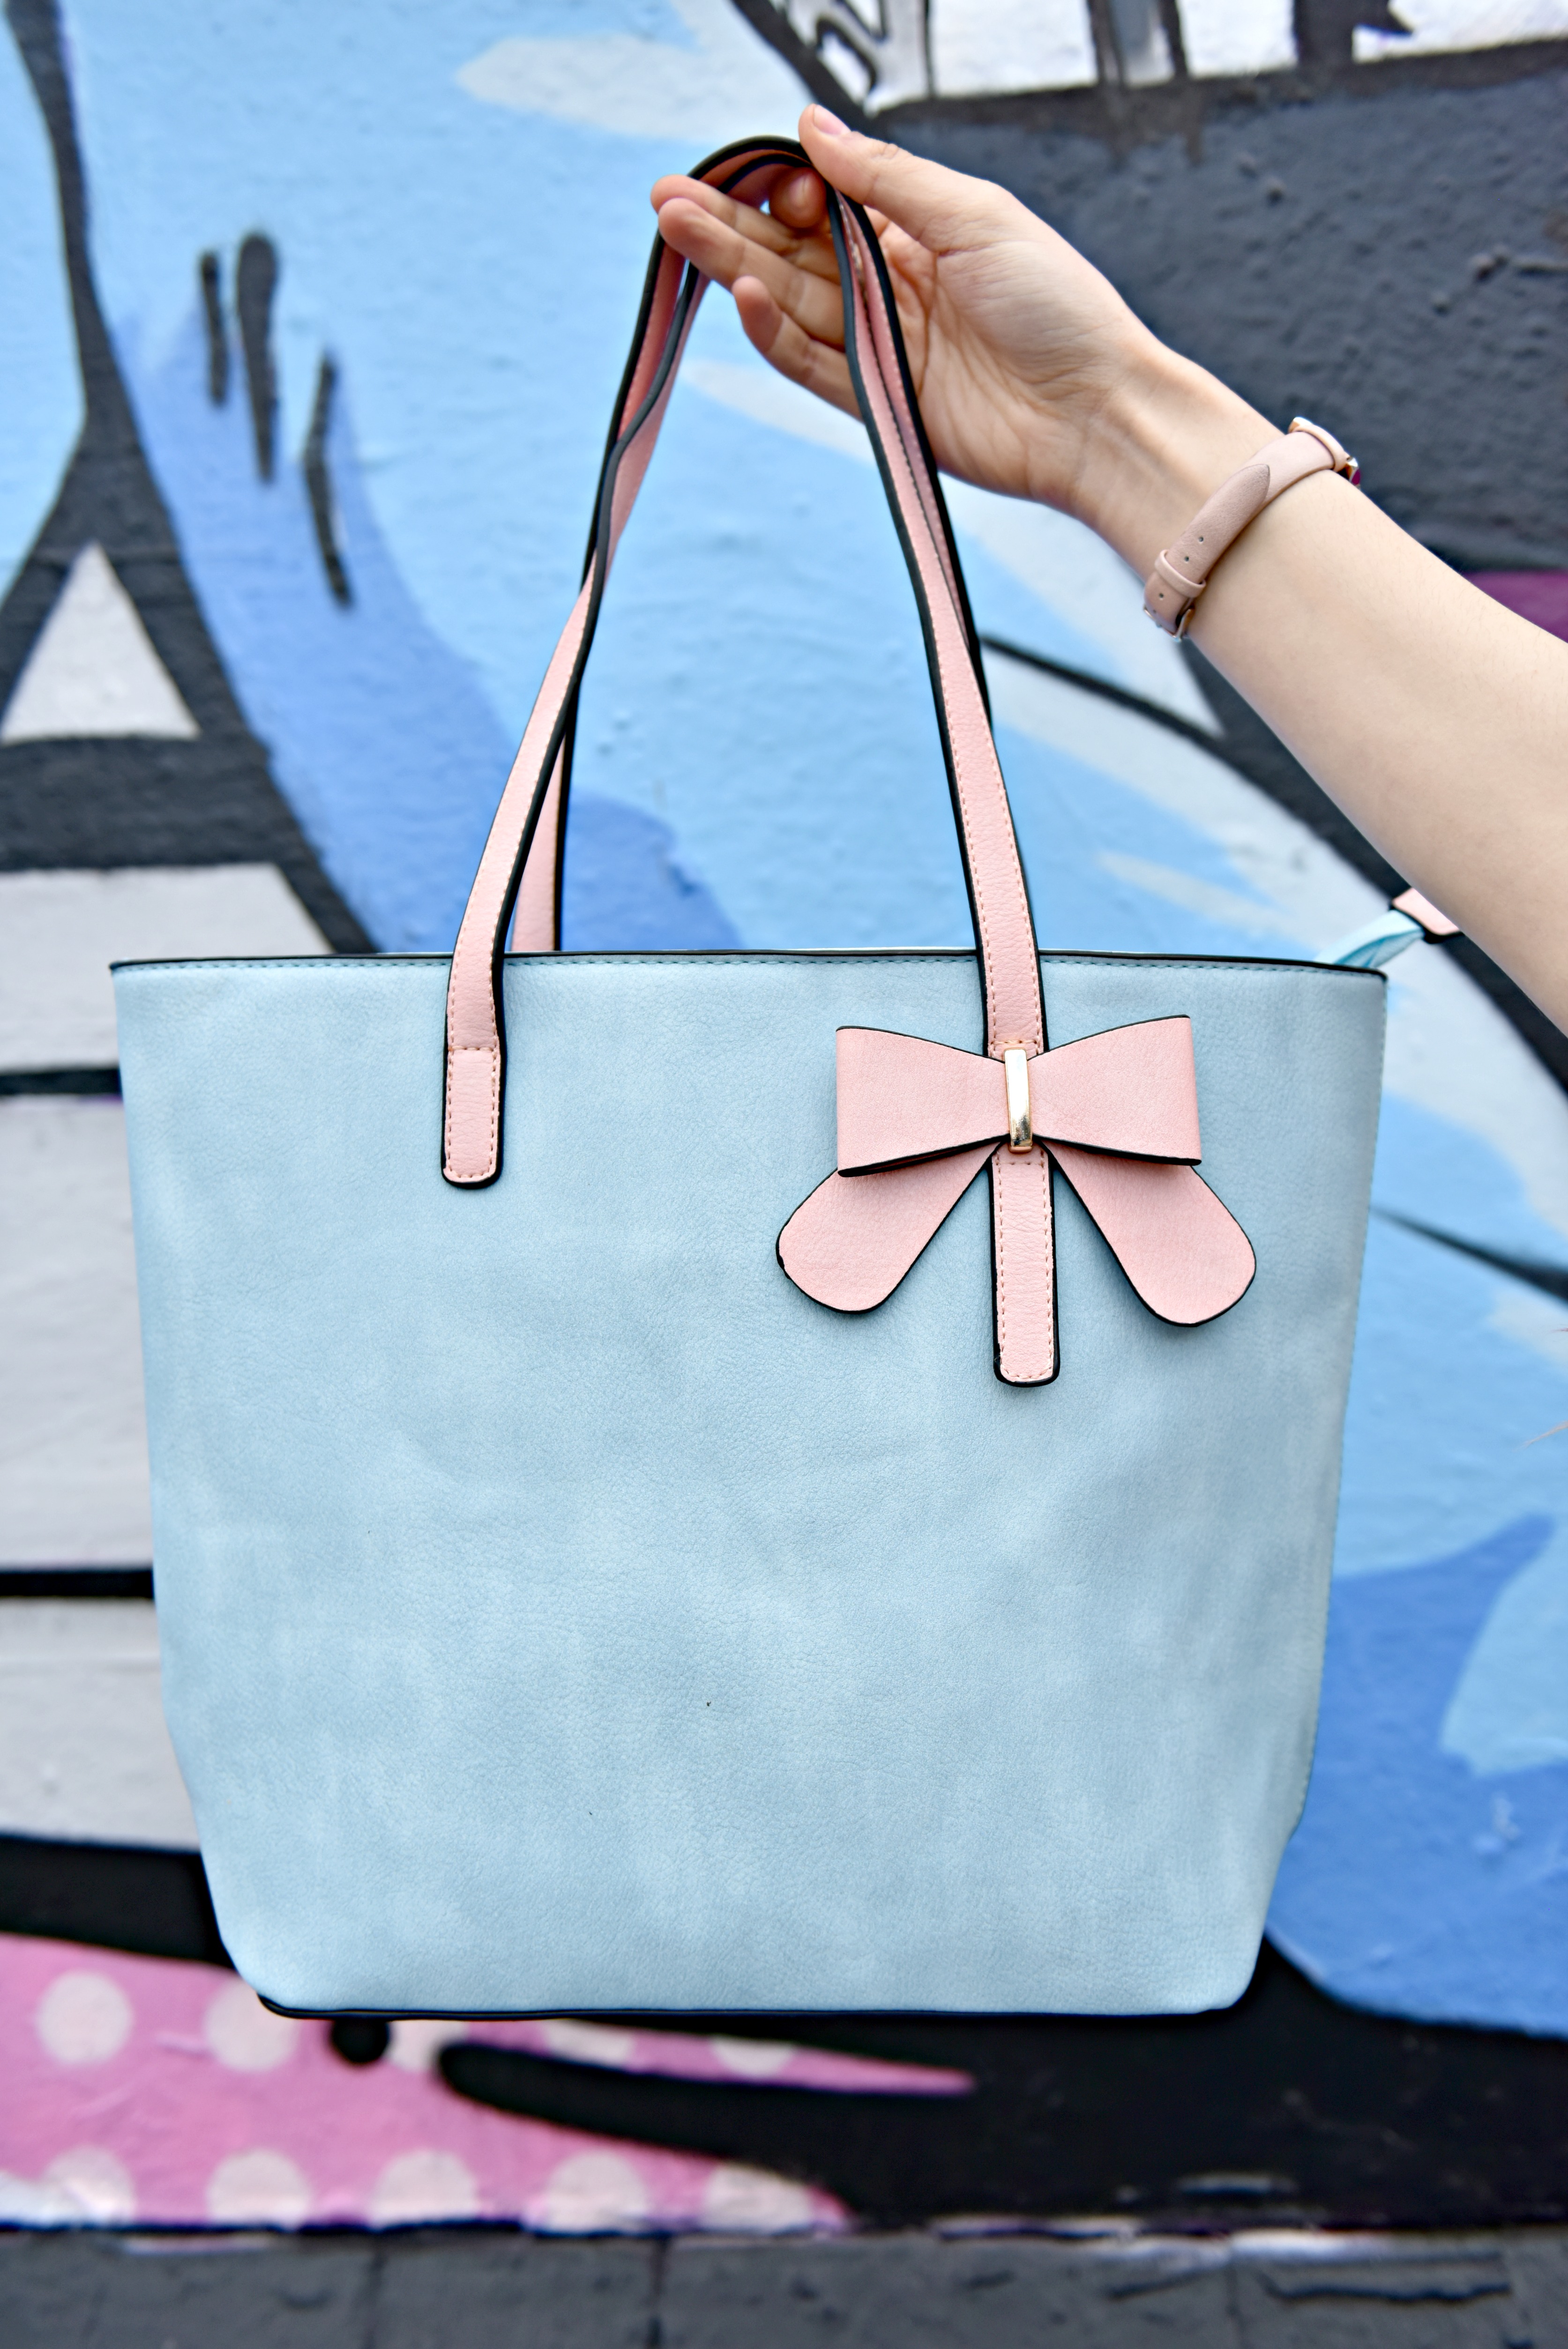 <img src="ana.jpg" alt="ana blue and pink bag ooh accessories "> 